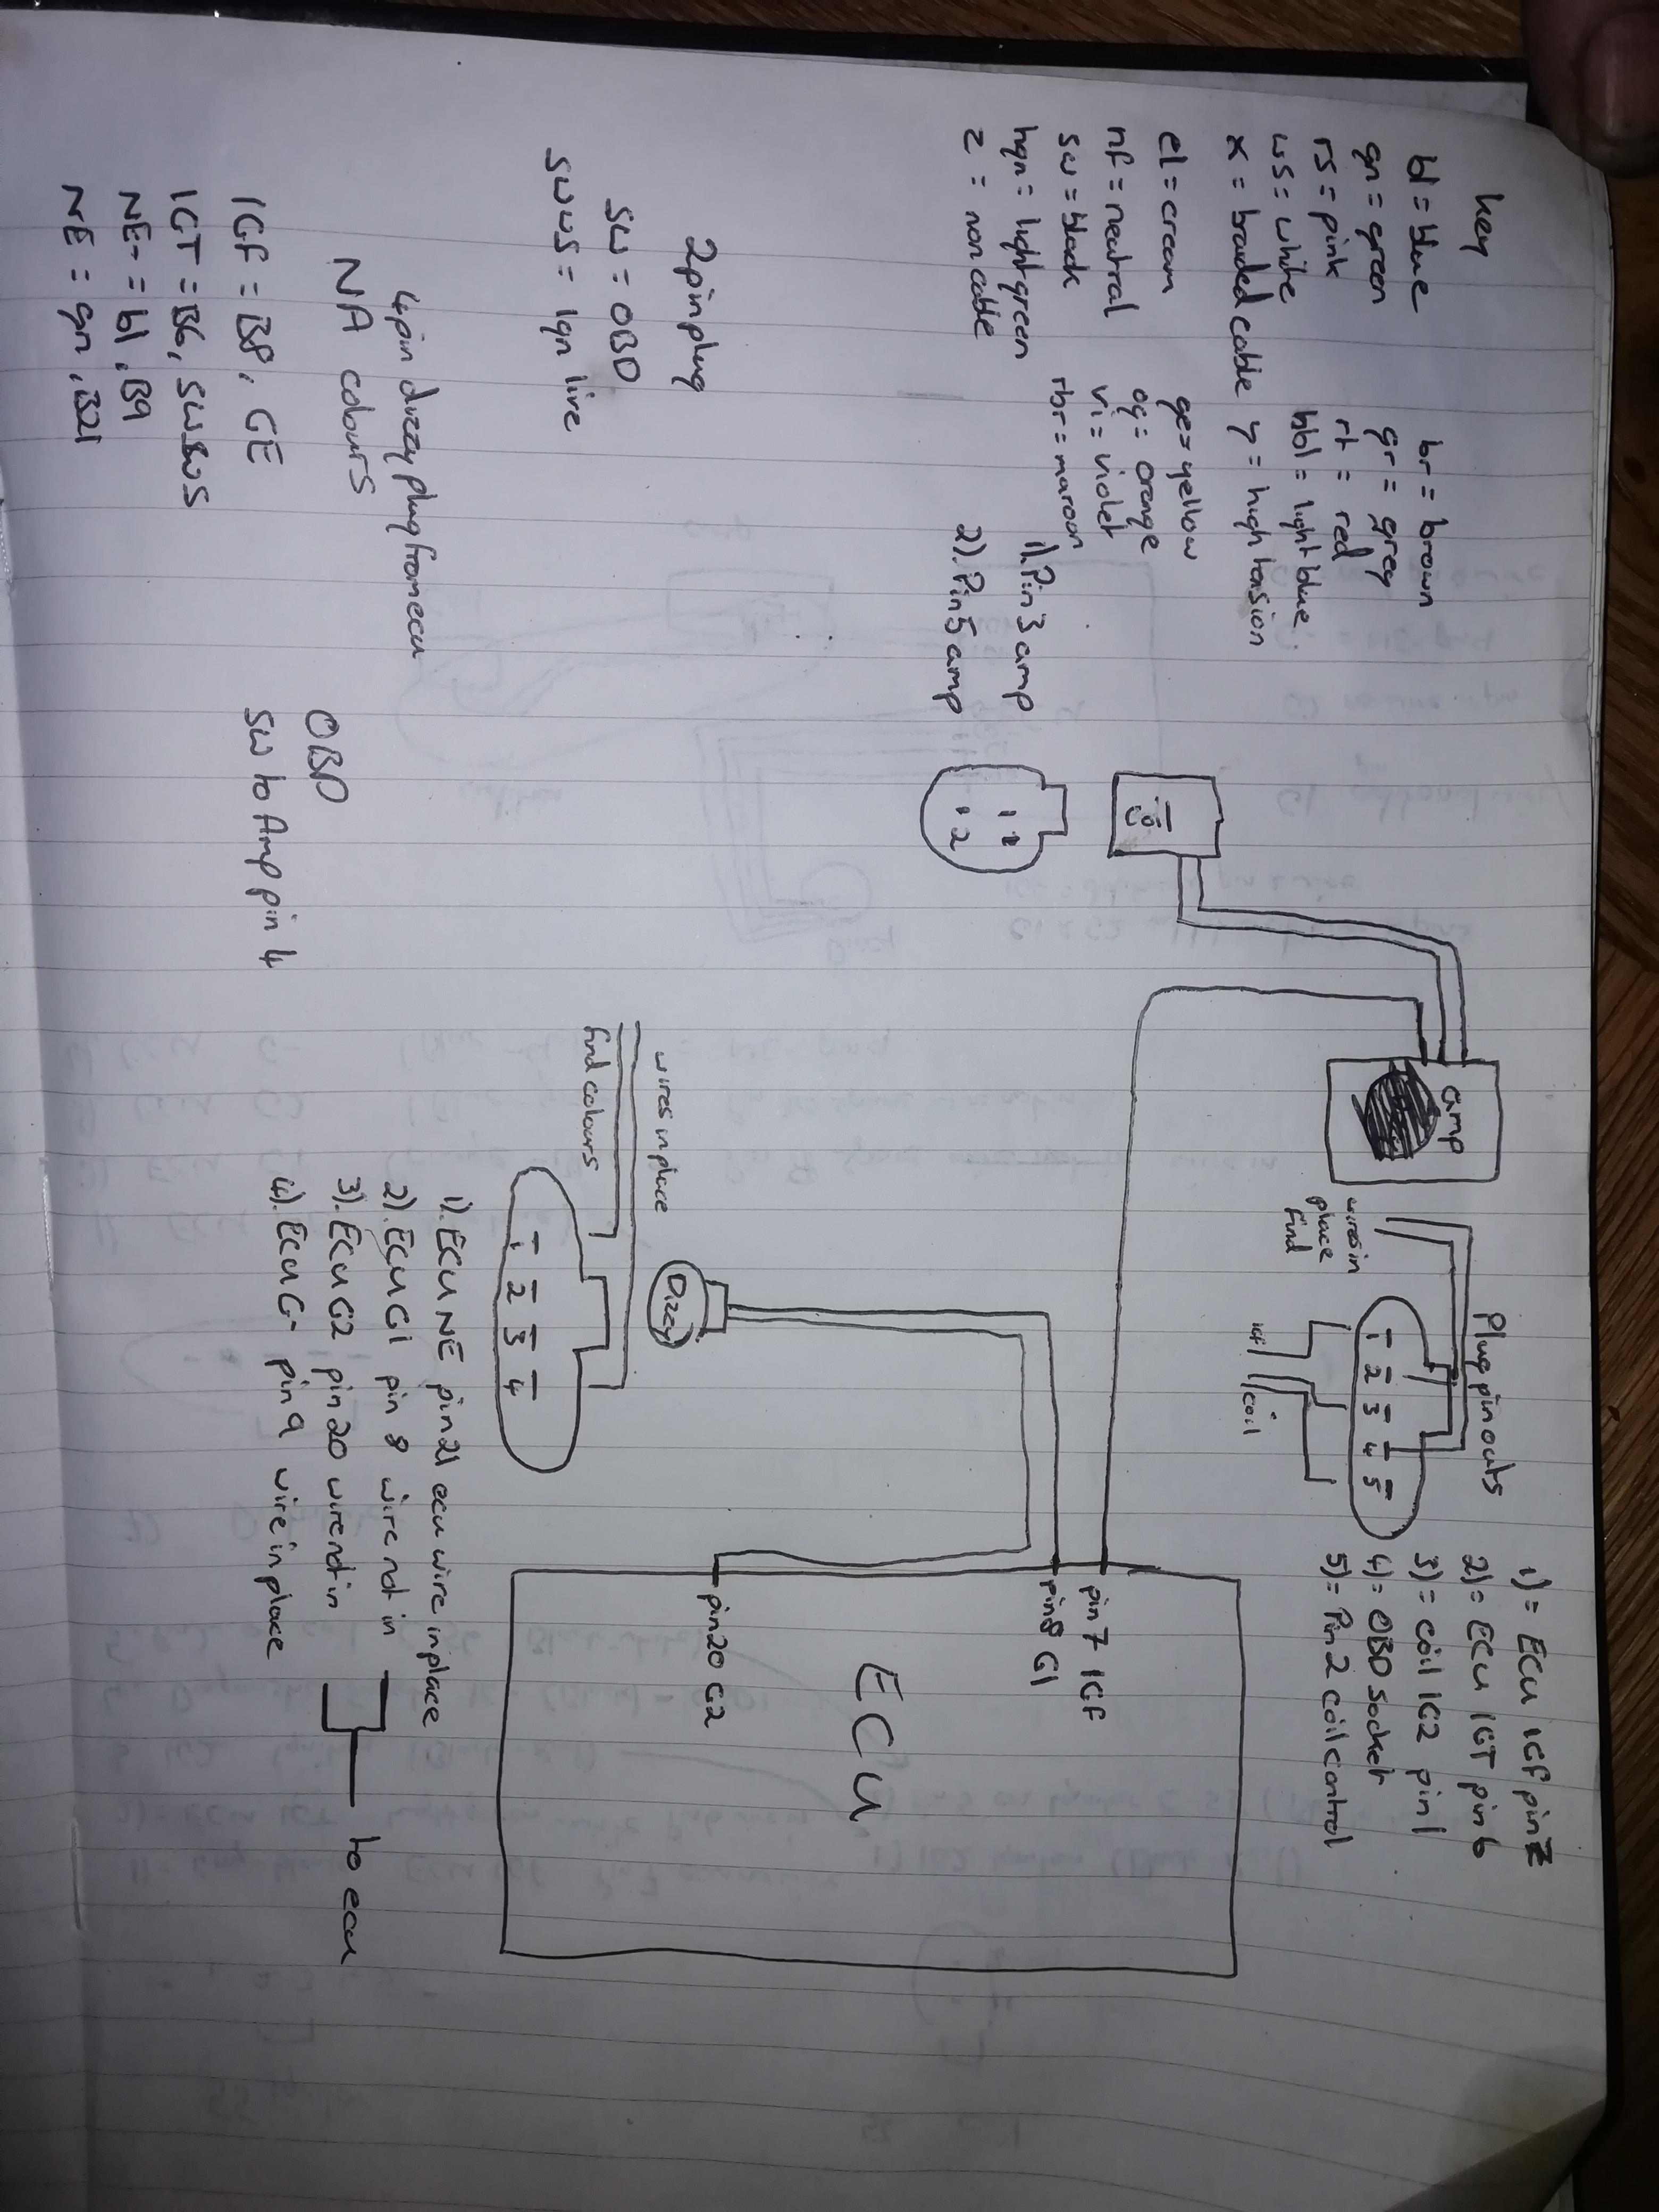 4e-fe engine bay wiring diagram plus ignition help - N/A E-Series